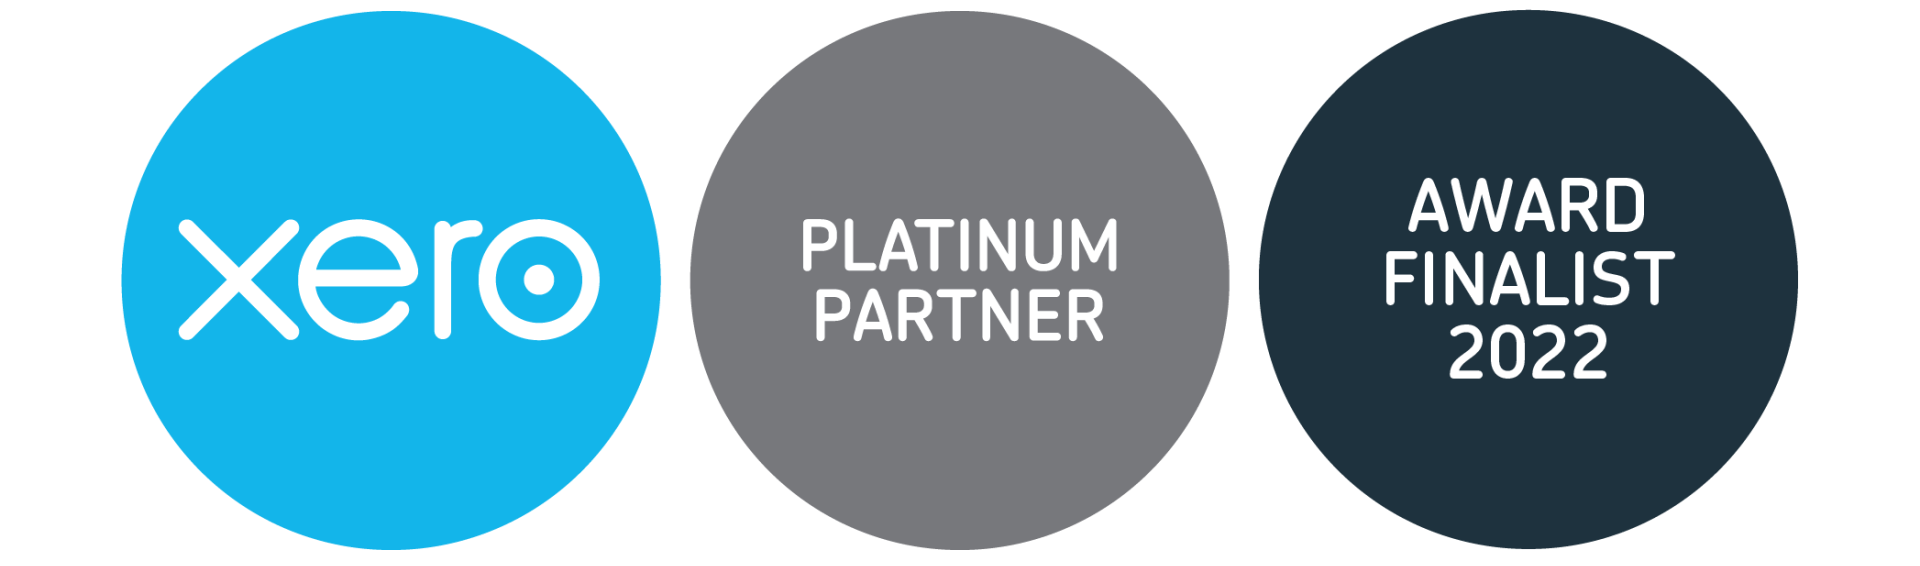 Xero Platinum Partner - All Accounted For